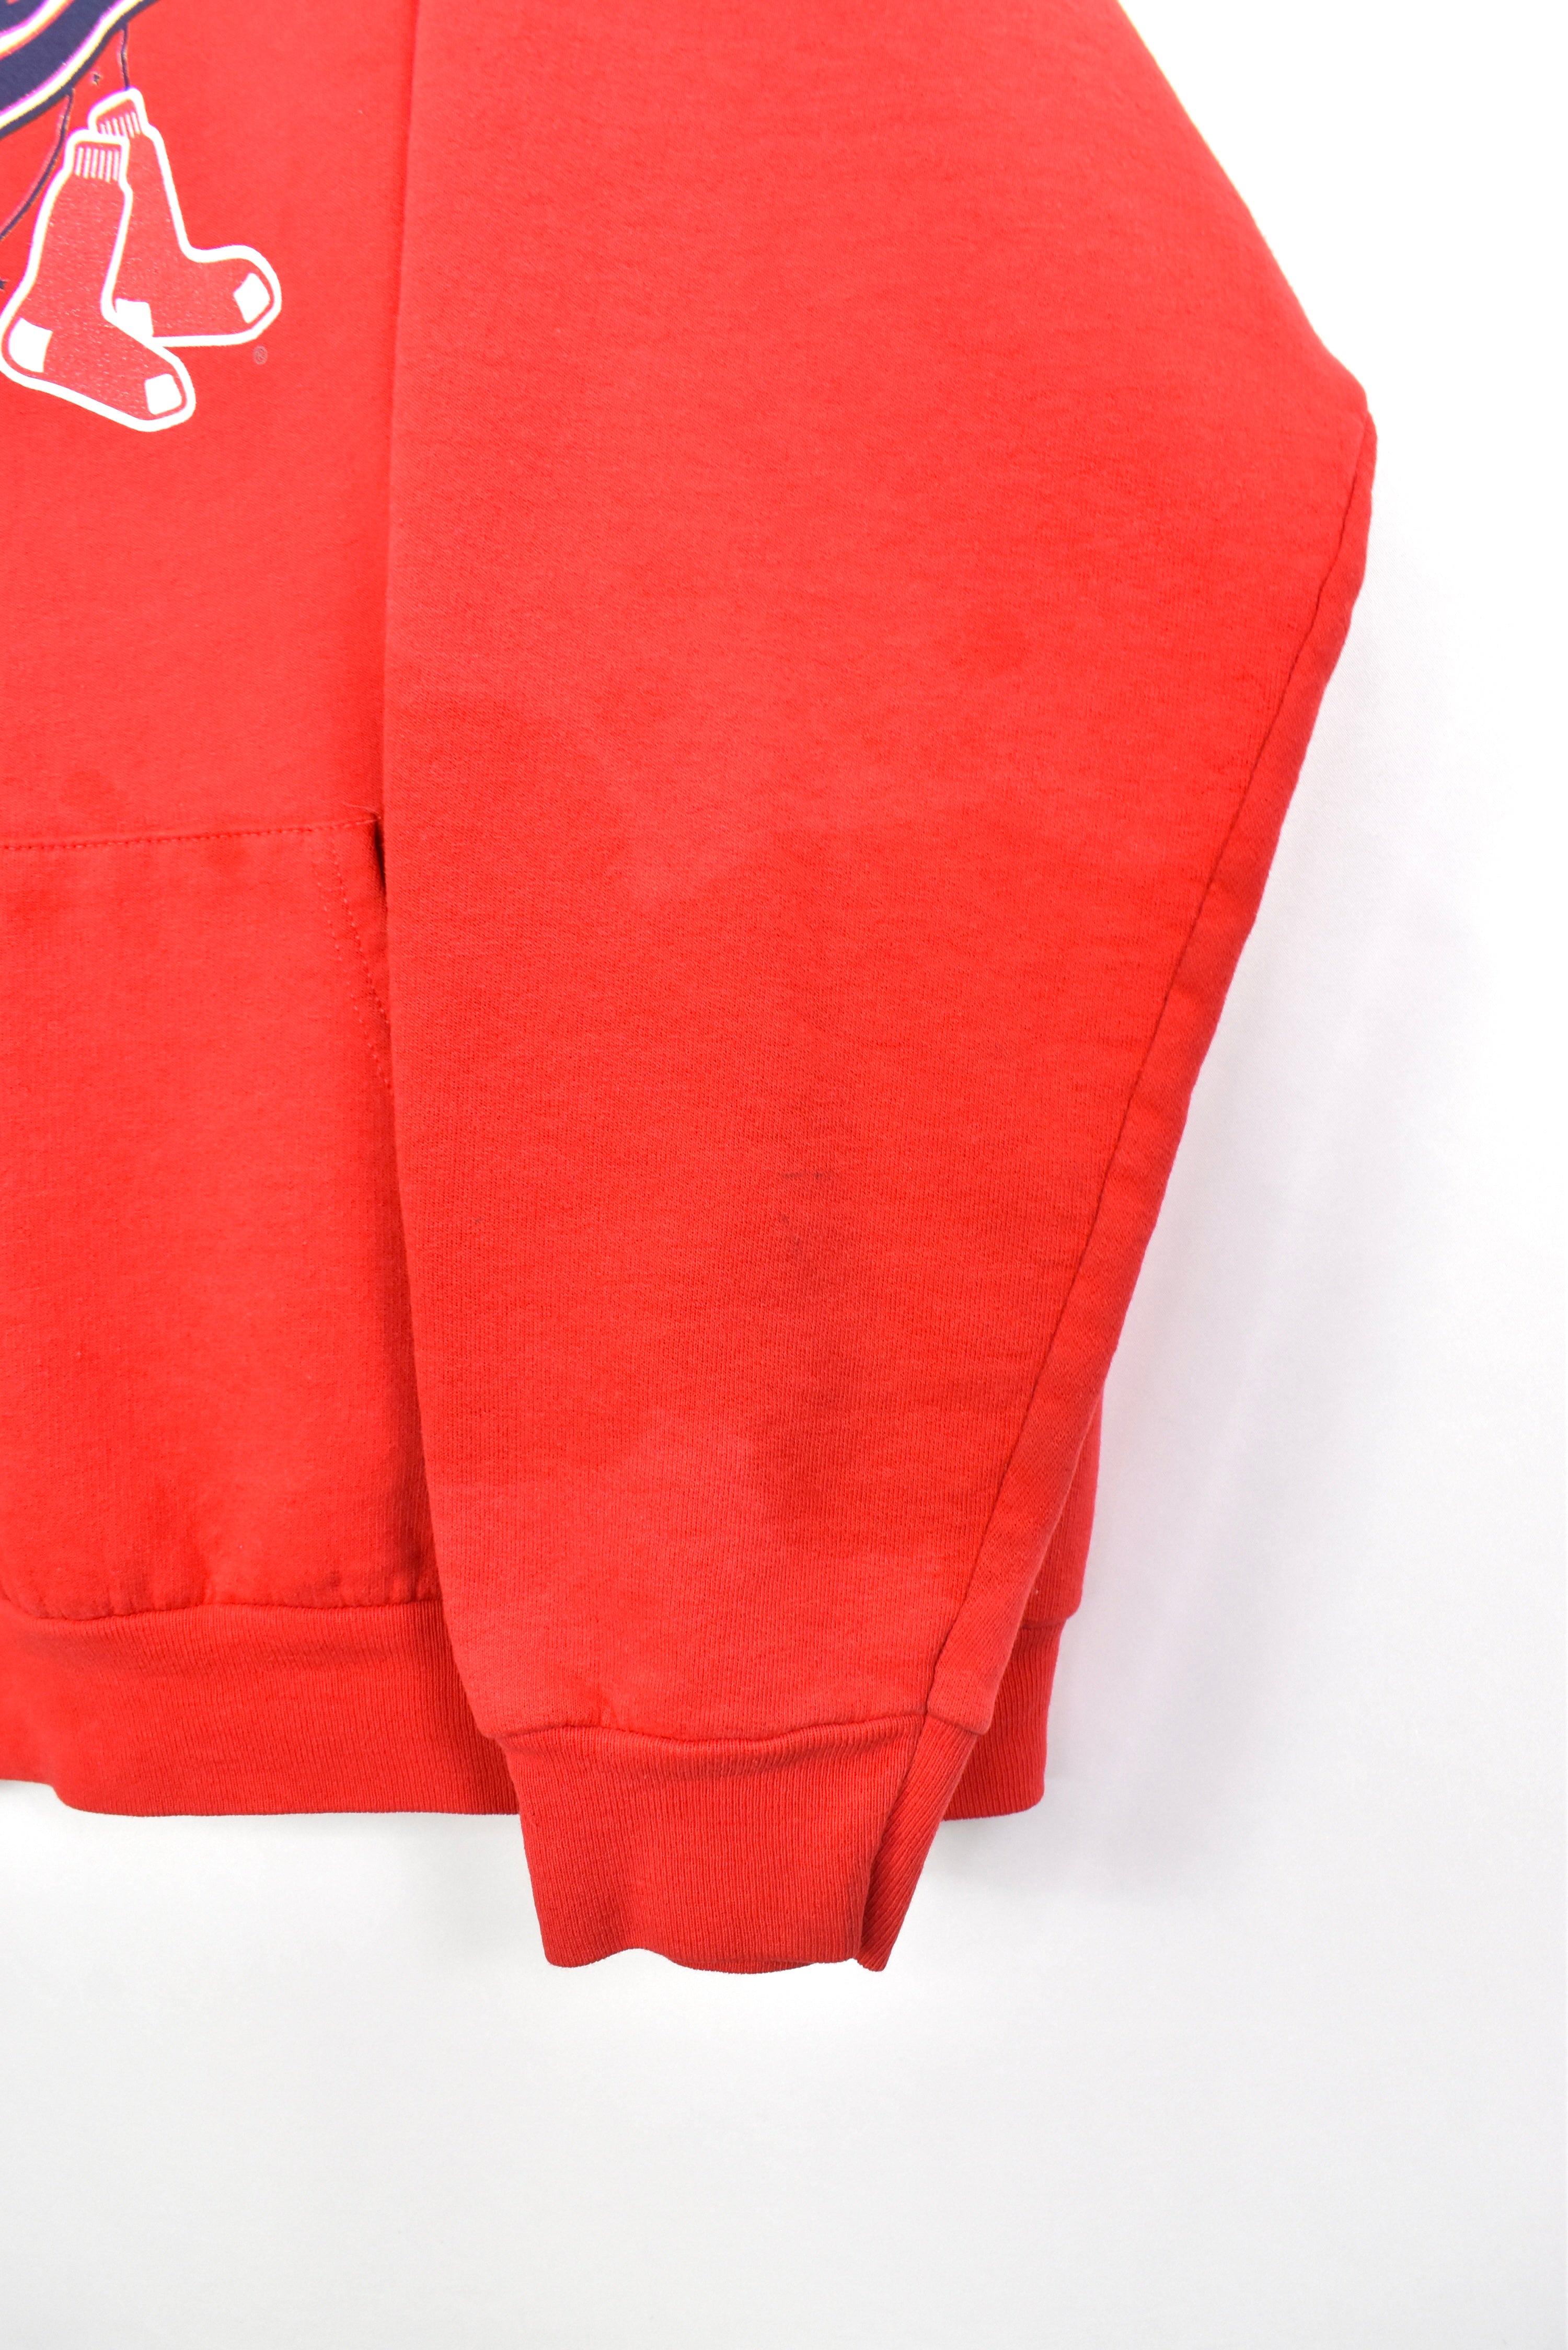 Vintage Boston Red Sox hoodie, MLB graphic red sweatshirt - AUXL PRO SPORT